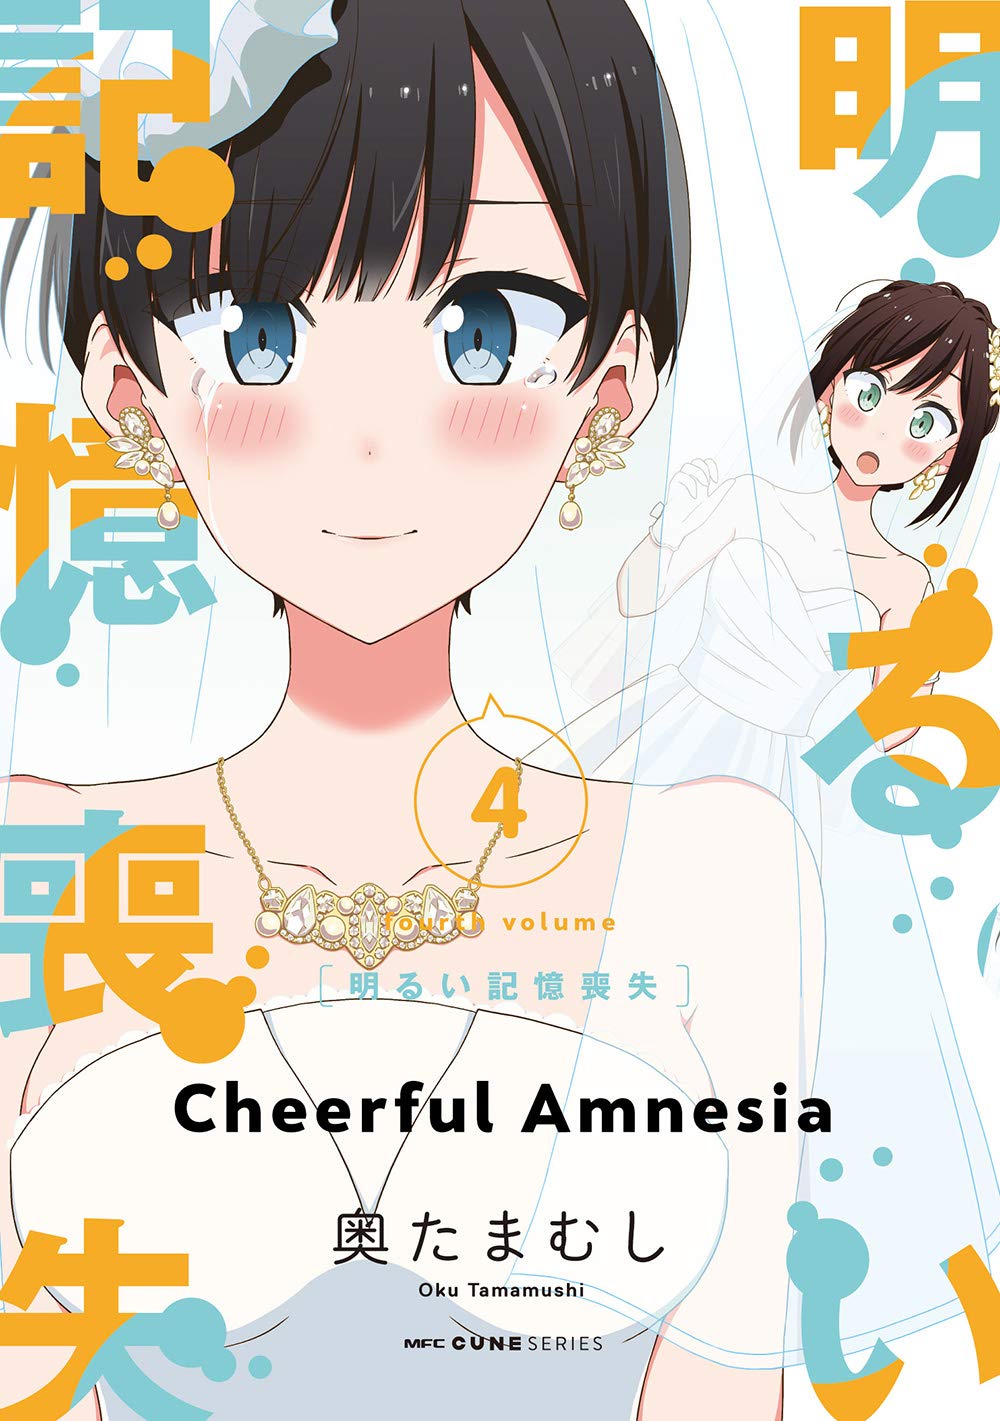 Cheerful Amnesia